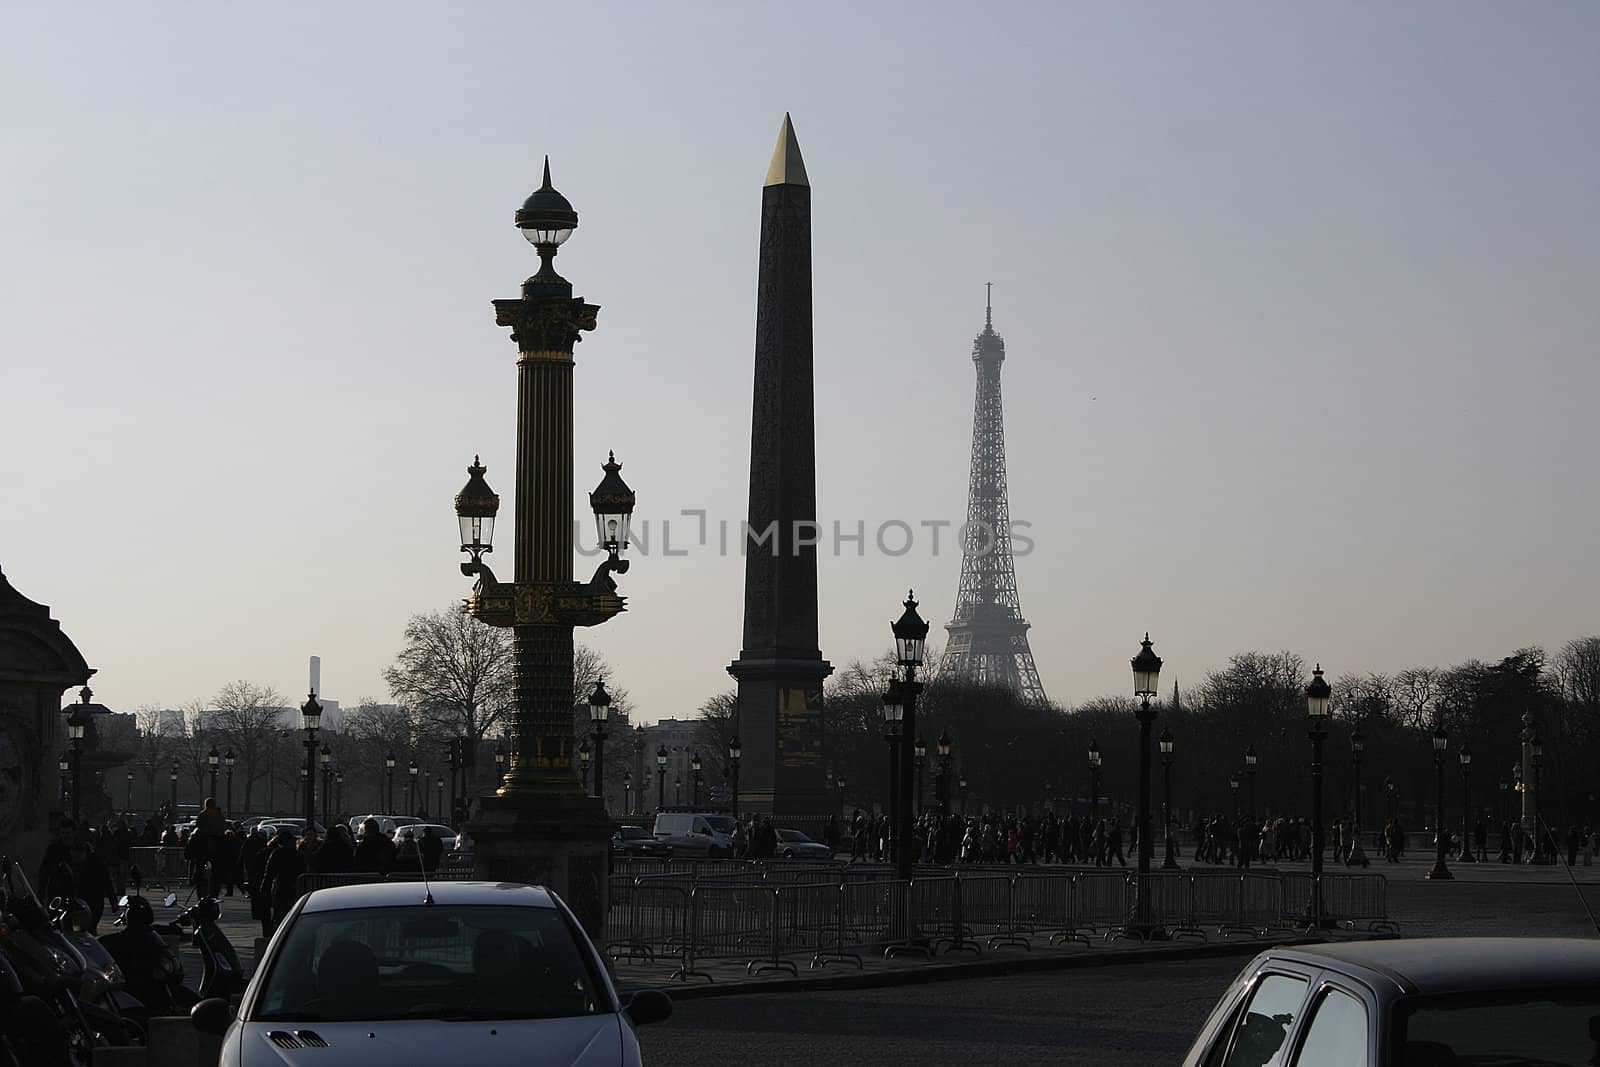 La Tour Eiffel, L'obelisque, lantern